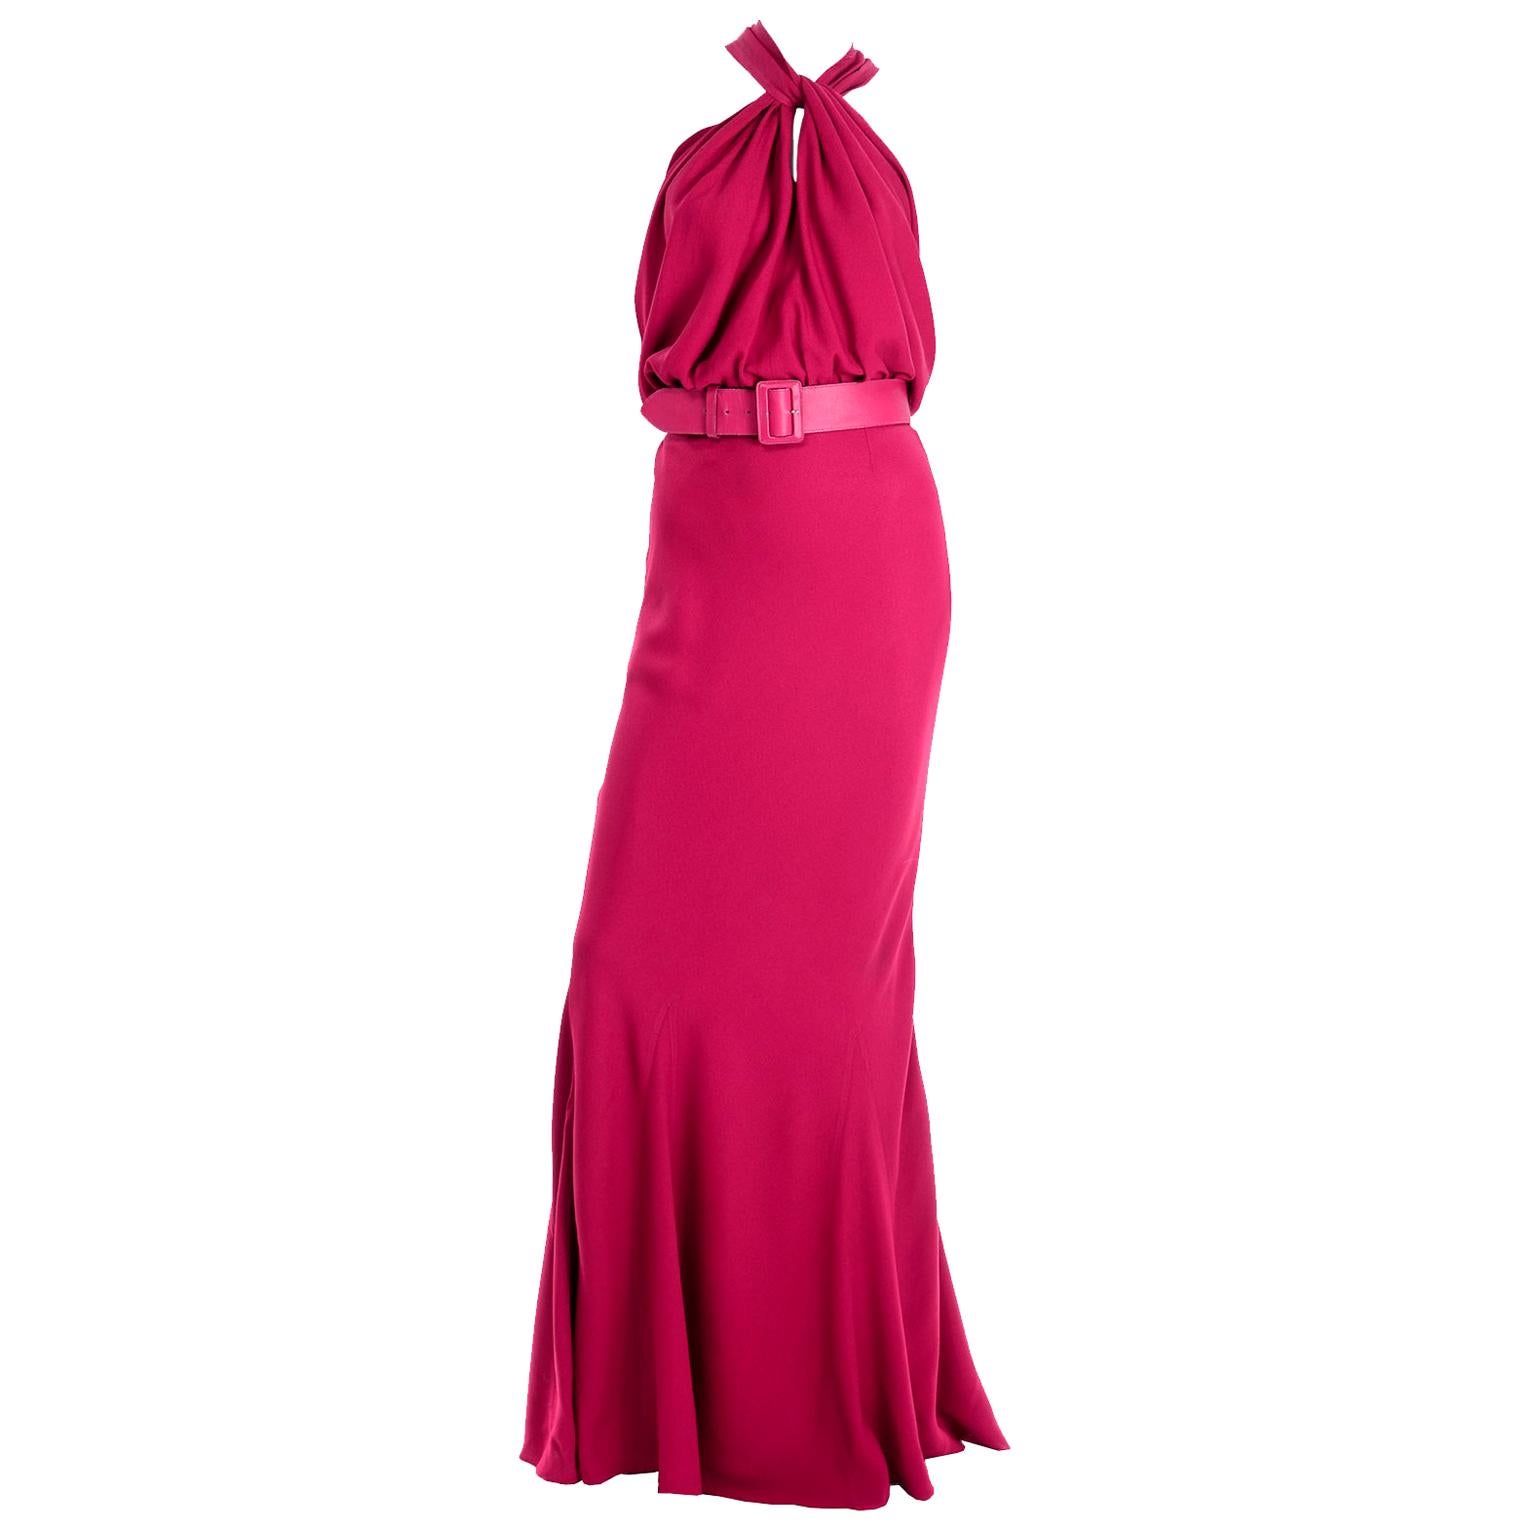 Christian Dior John Galliano Raspberry Magenta Pink 1930s Inspired Evening Dress